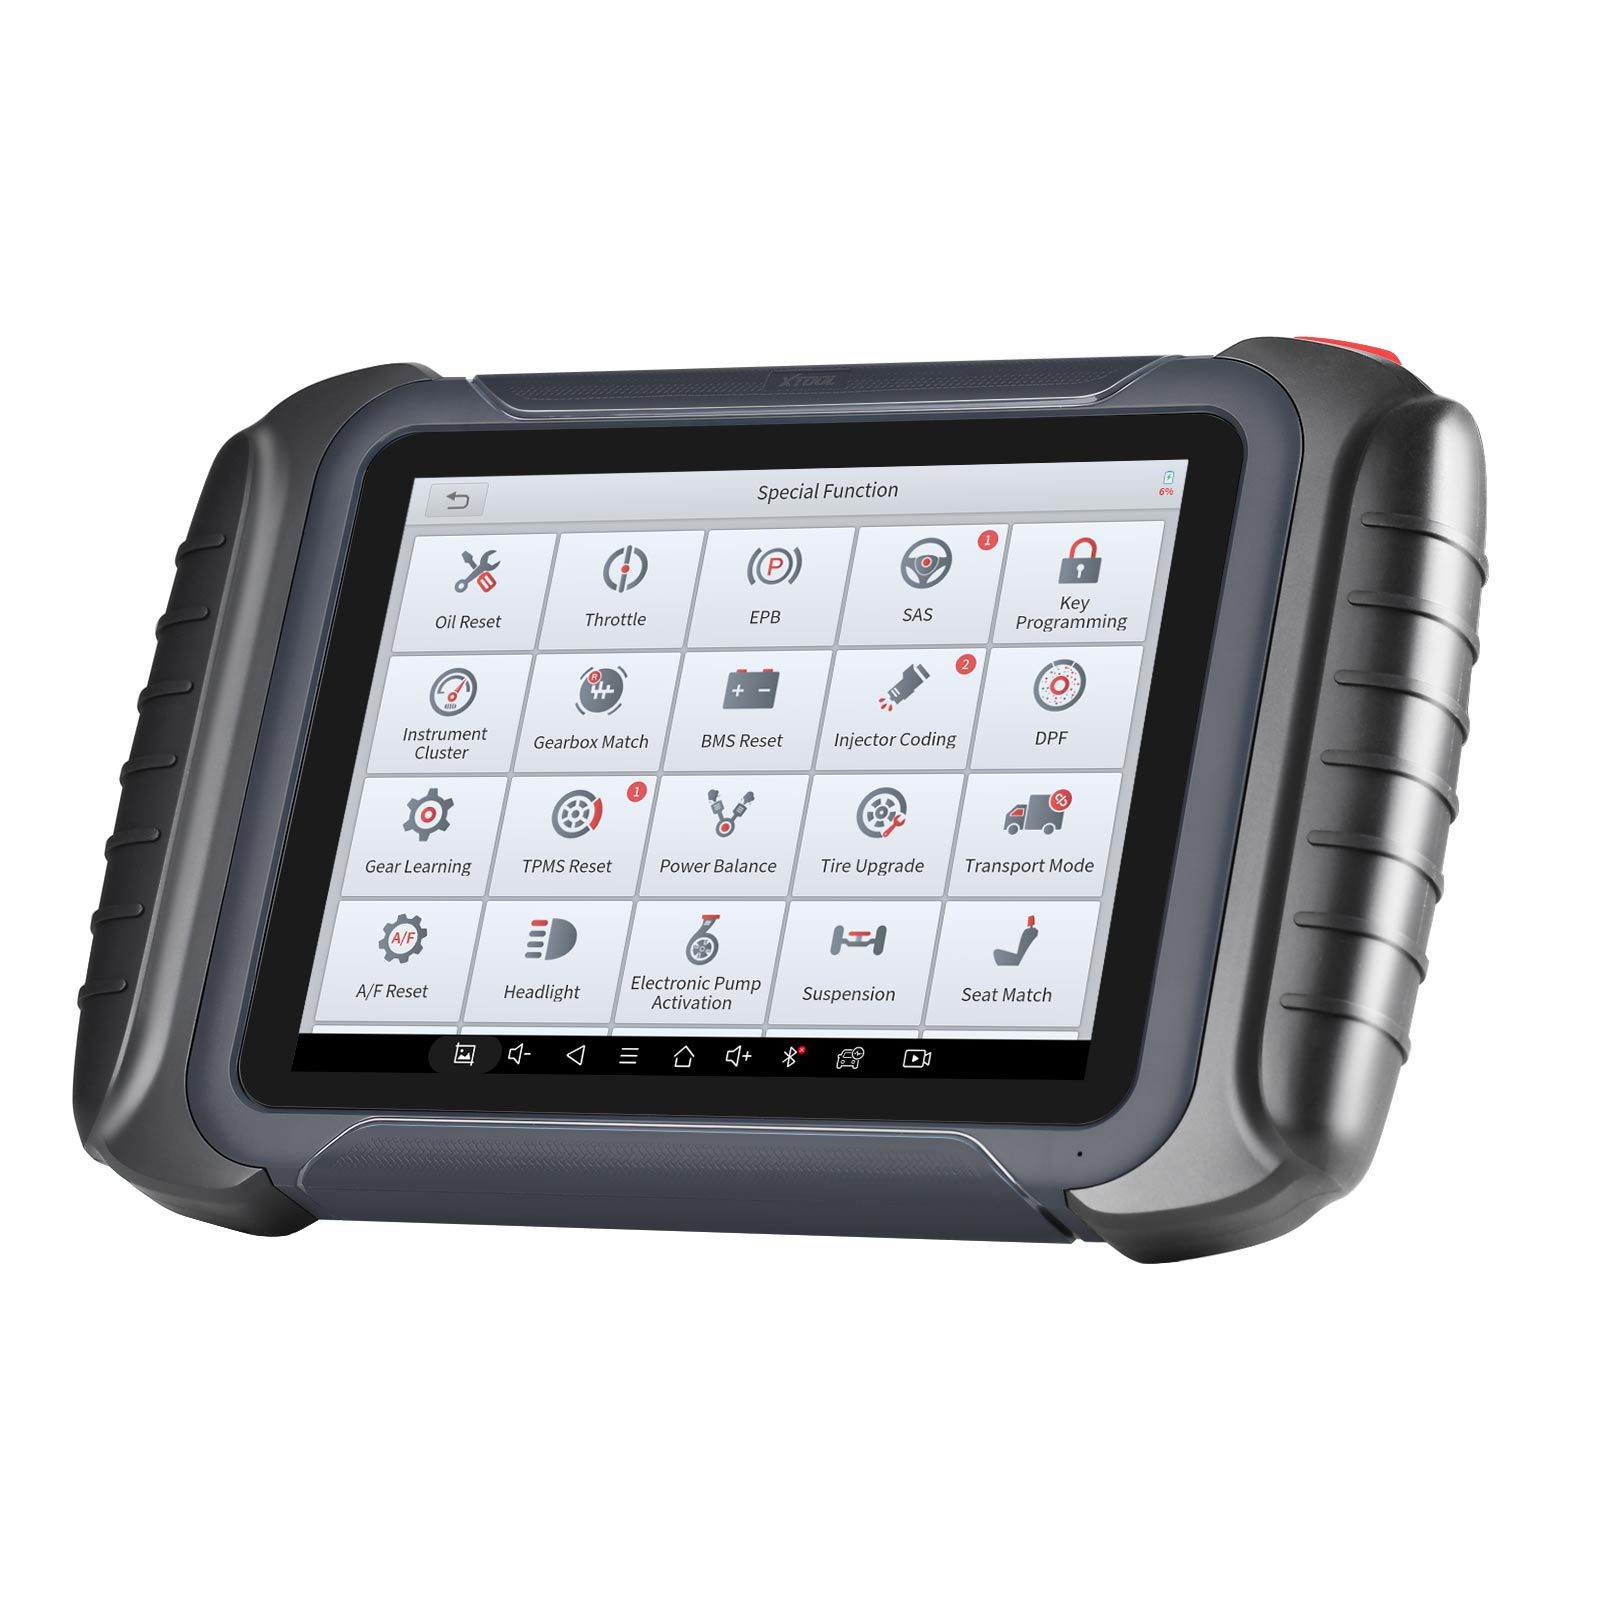 2022 Newest XTOOL D8 Professional Automotive Scan Tool Bi-Directional Control OBD2 Car Diagnostic Scanner+ECU Coding 31+ Services+Key Programming